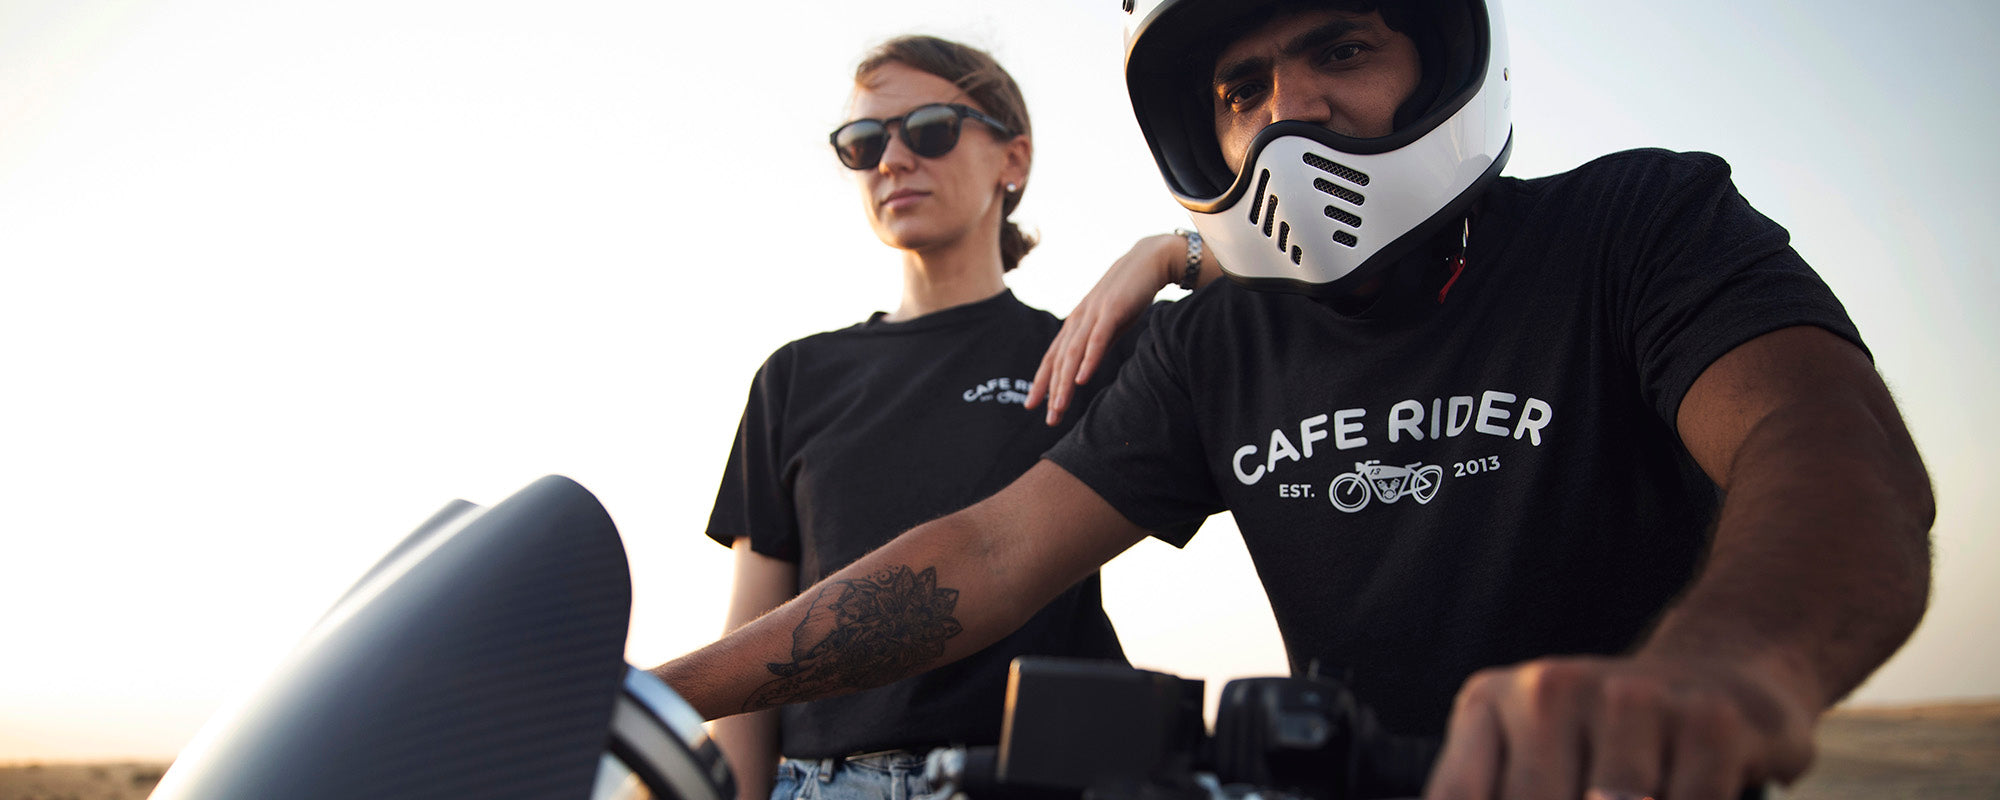 Cafe Rider Merchandise Lifestyle